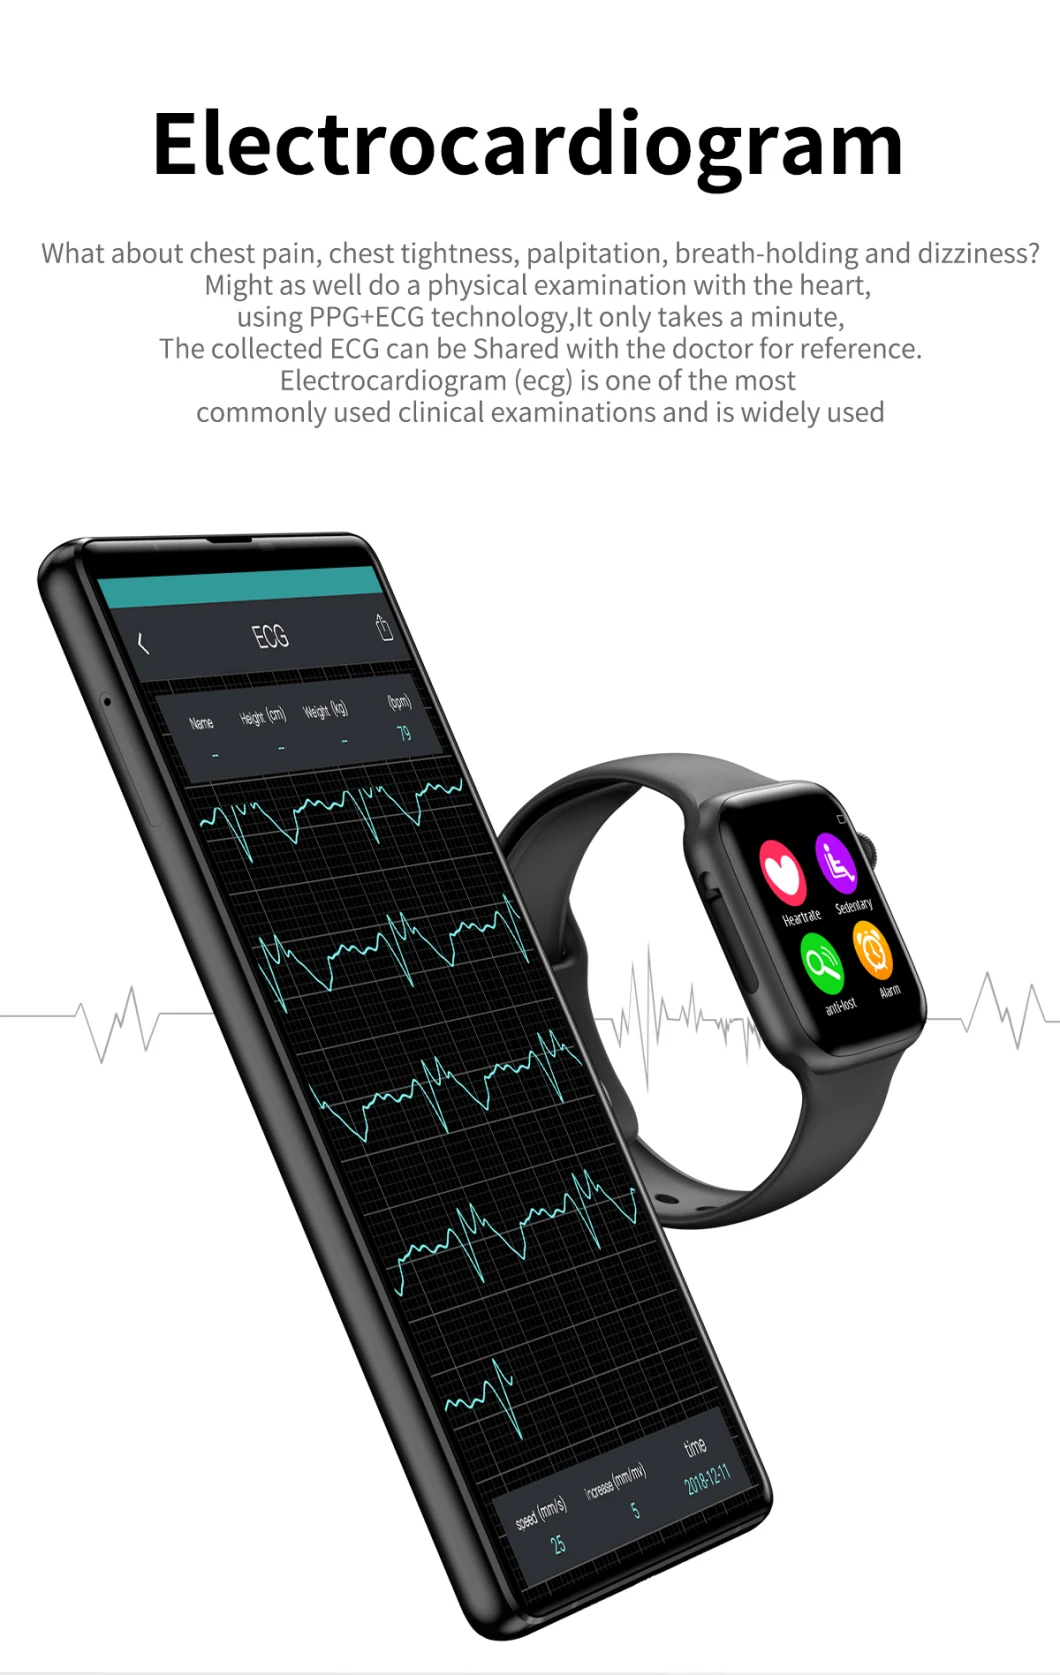 Shenzhen Smartwatch Factory Sport Bluetooth W35 Smartwatch NFC Android ECG Sleep Monitor Touch Screen